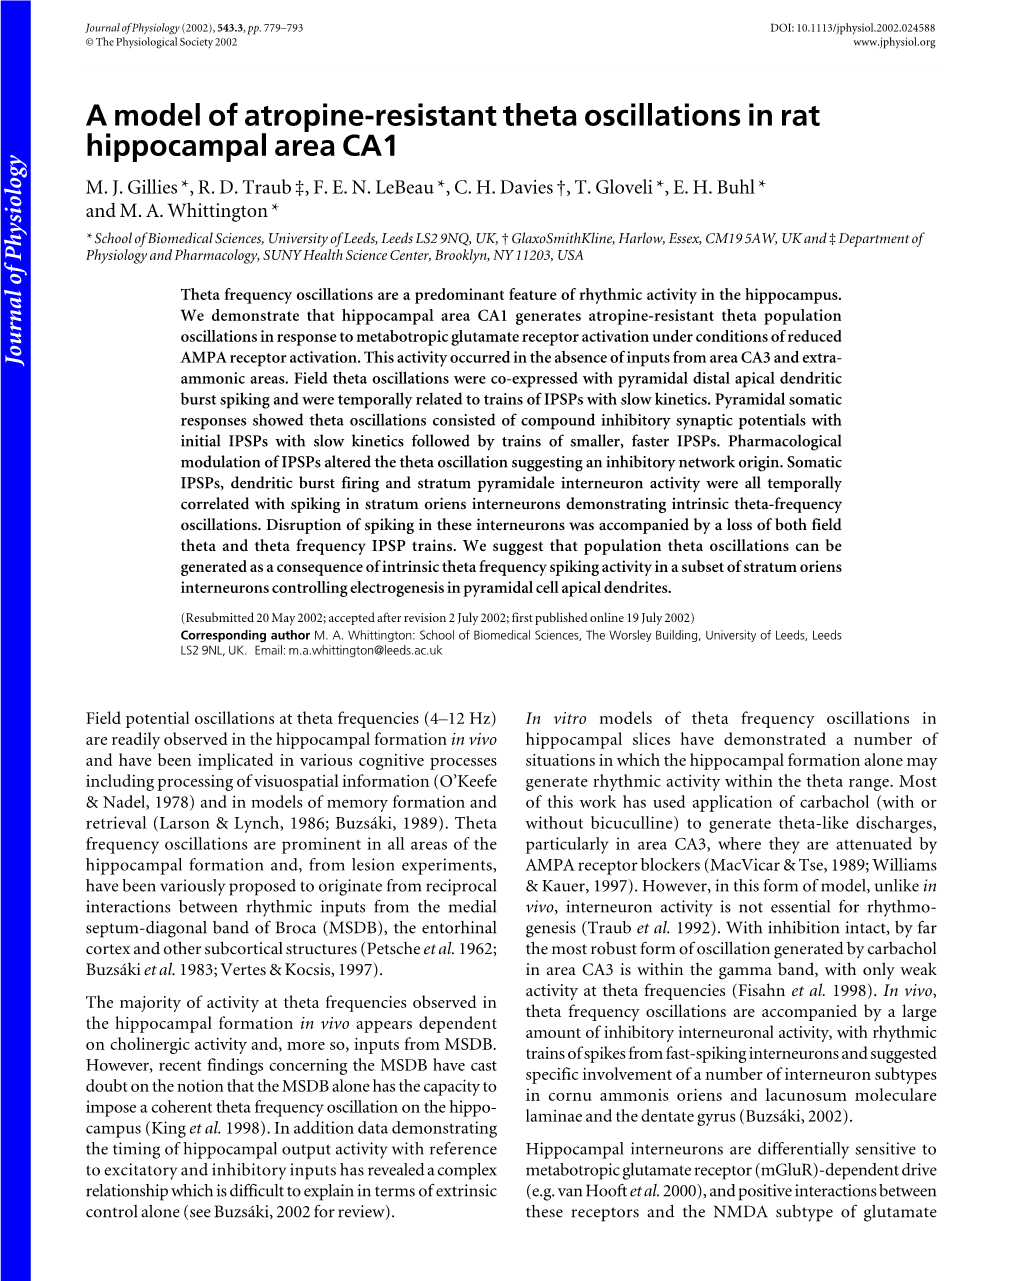 A Model of Atropine-Resistant Theta Oscillations in Rat Hippocampal Area